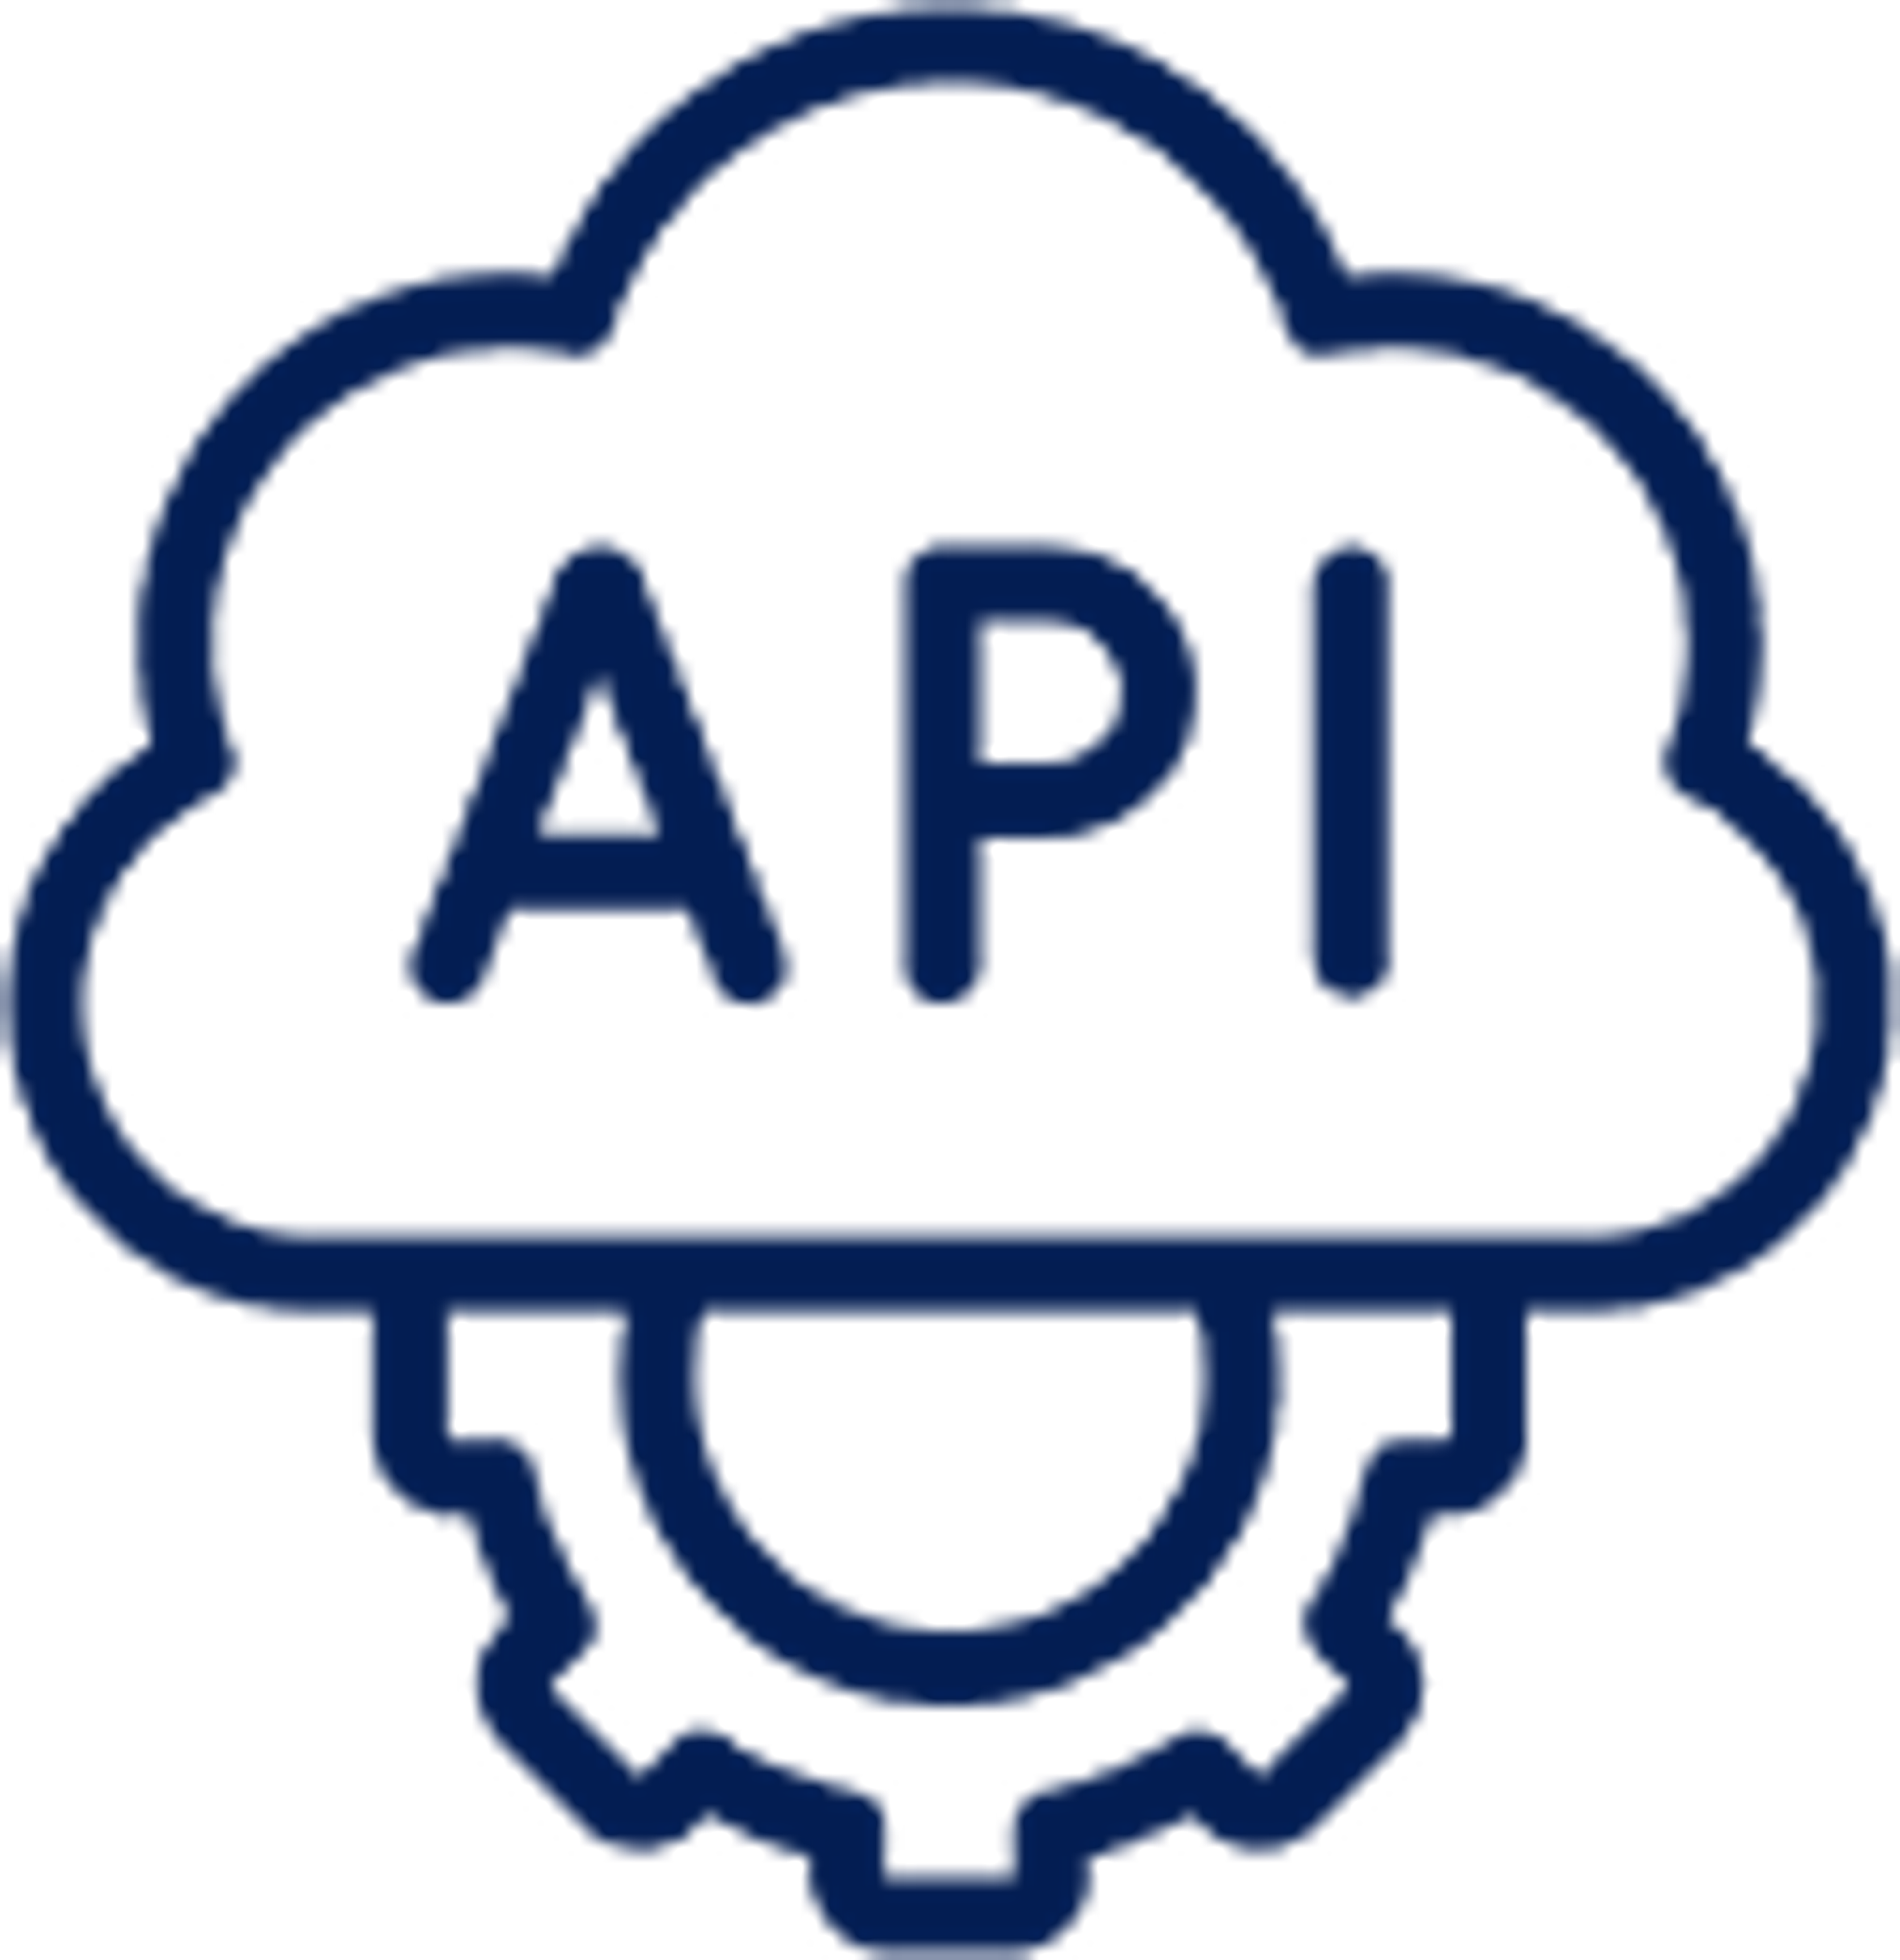 API Cloud